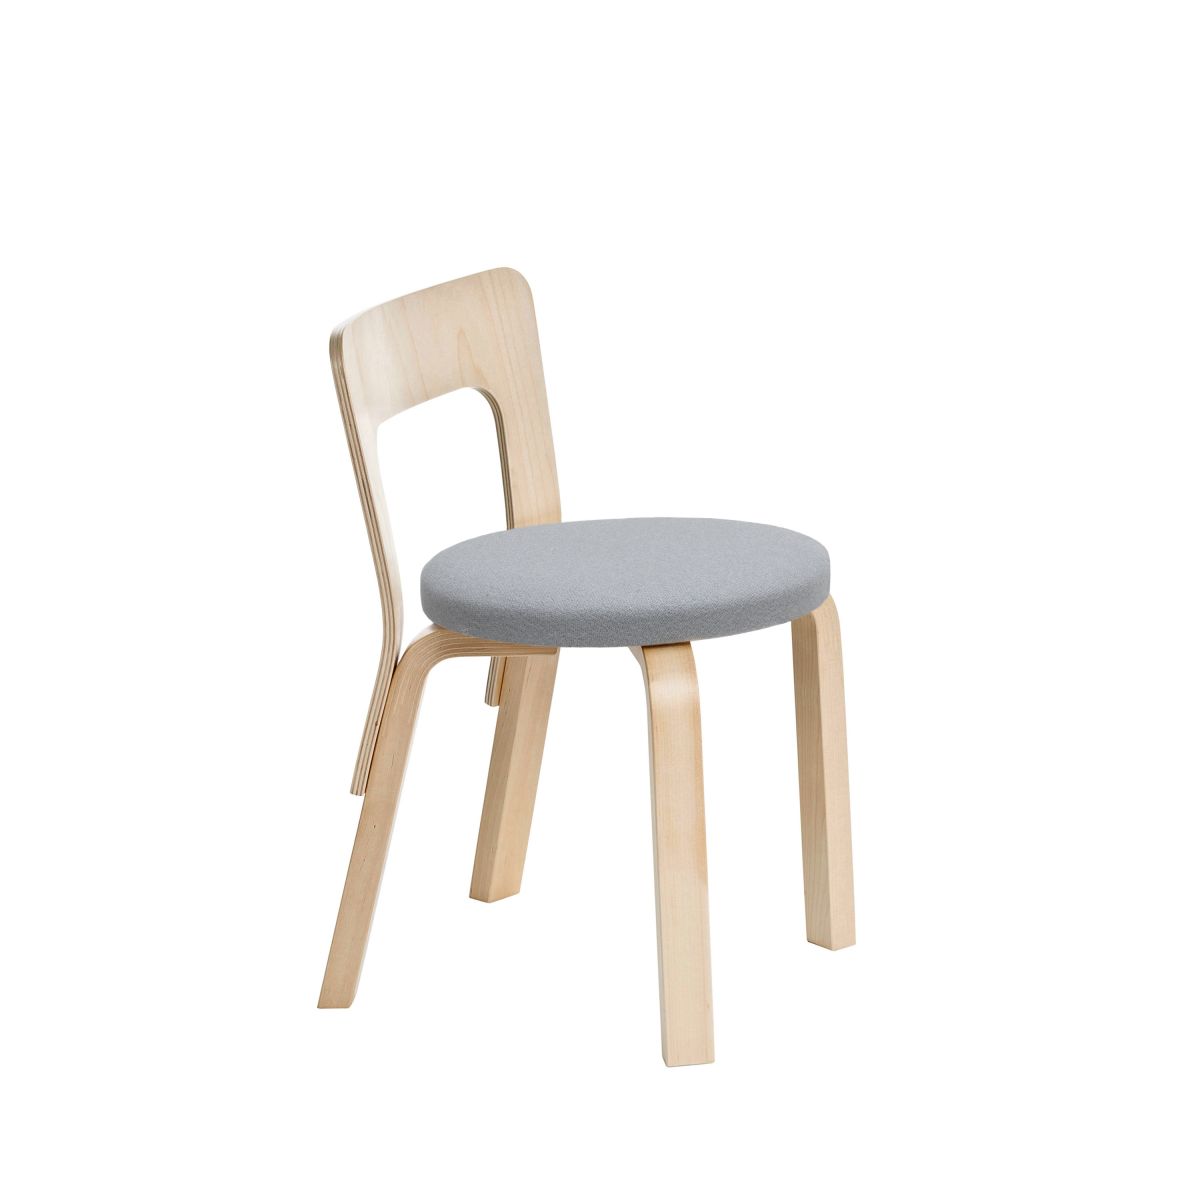 Children's Chair N65 legs birch_seat fabric upholstery_F